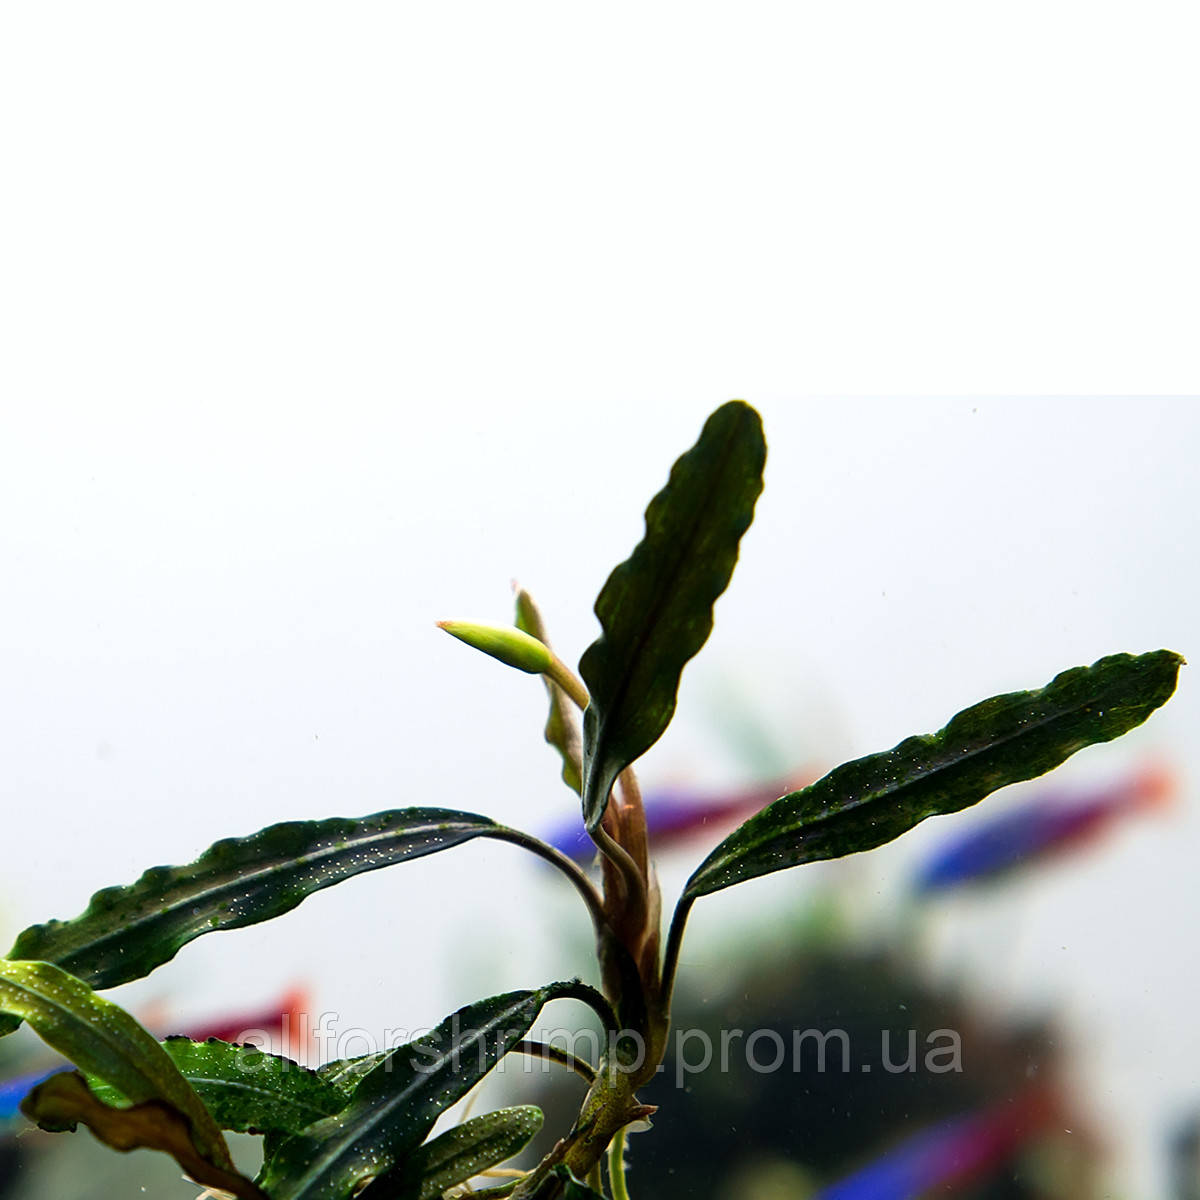 Буцефаландра / Bucephalandra sp. Mini Black Carpet, отросток 5 листов.